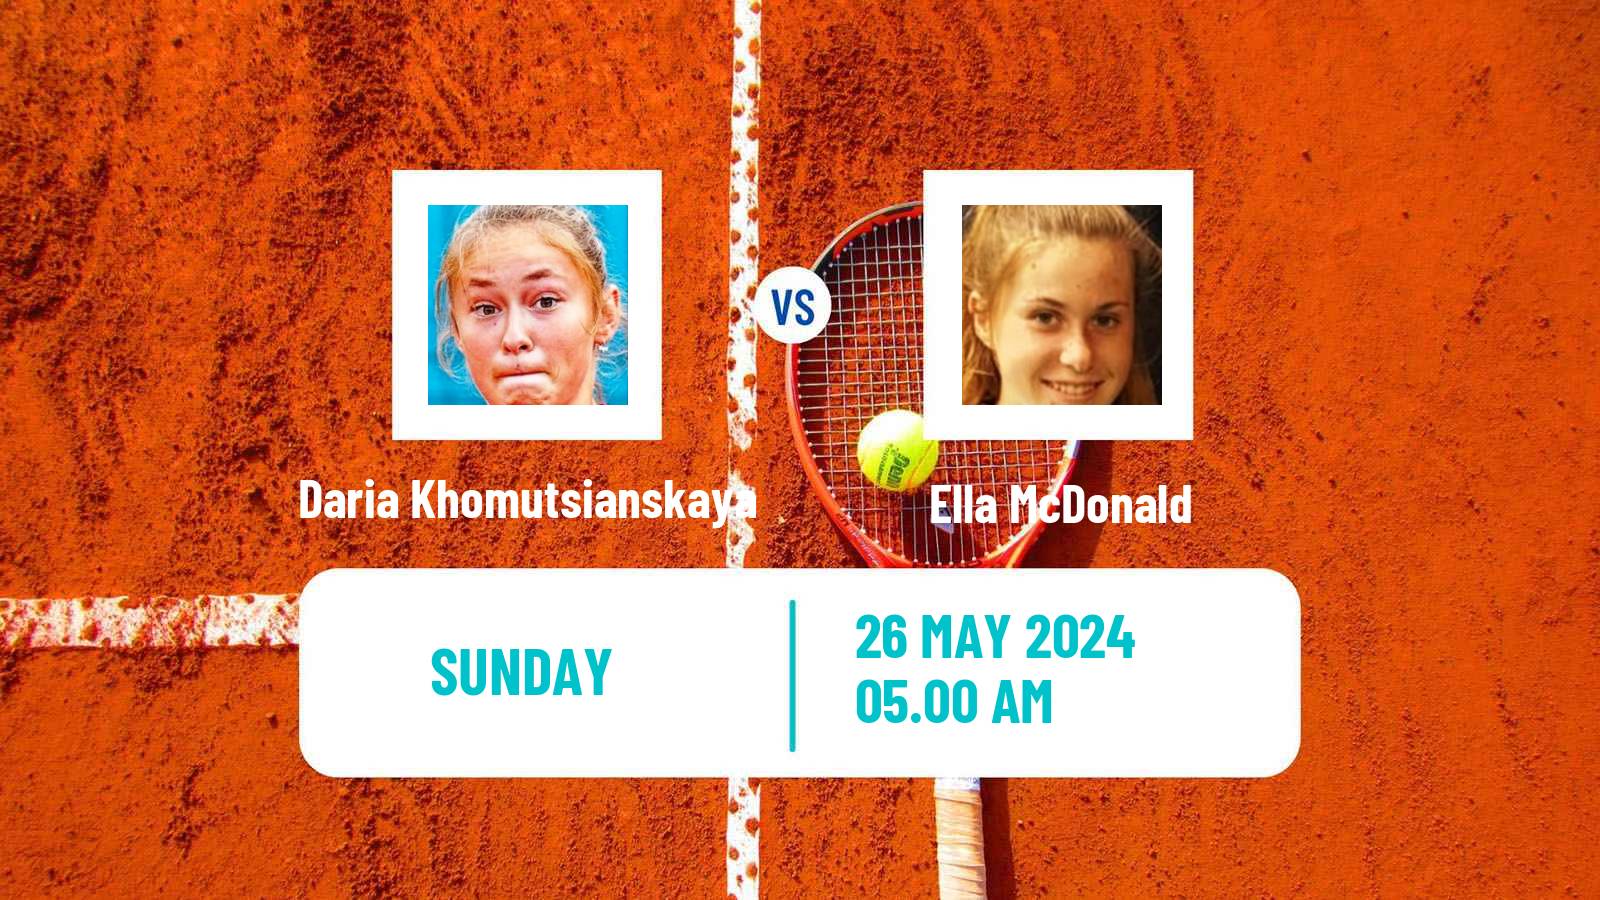 Tennis ITF W15 Monastir 19 Women Daria Khomutsianskaya - Ella McDonald